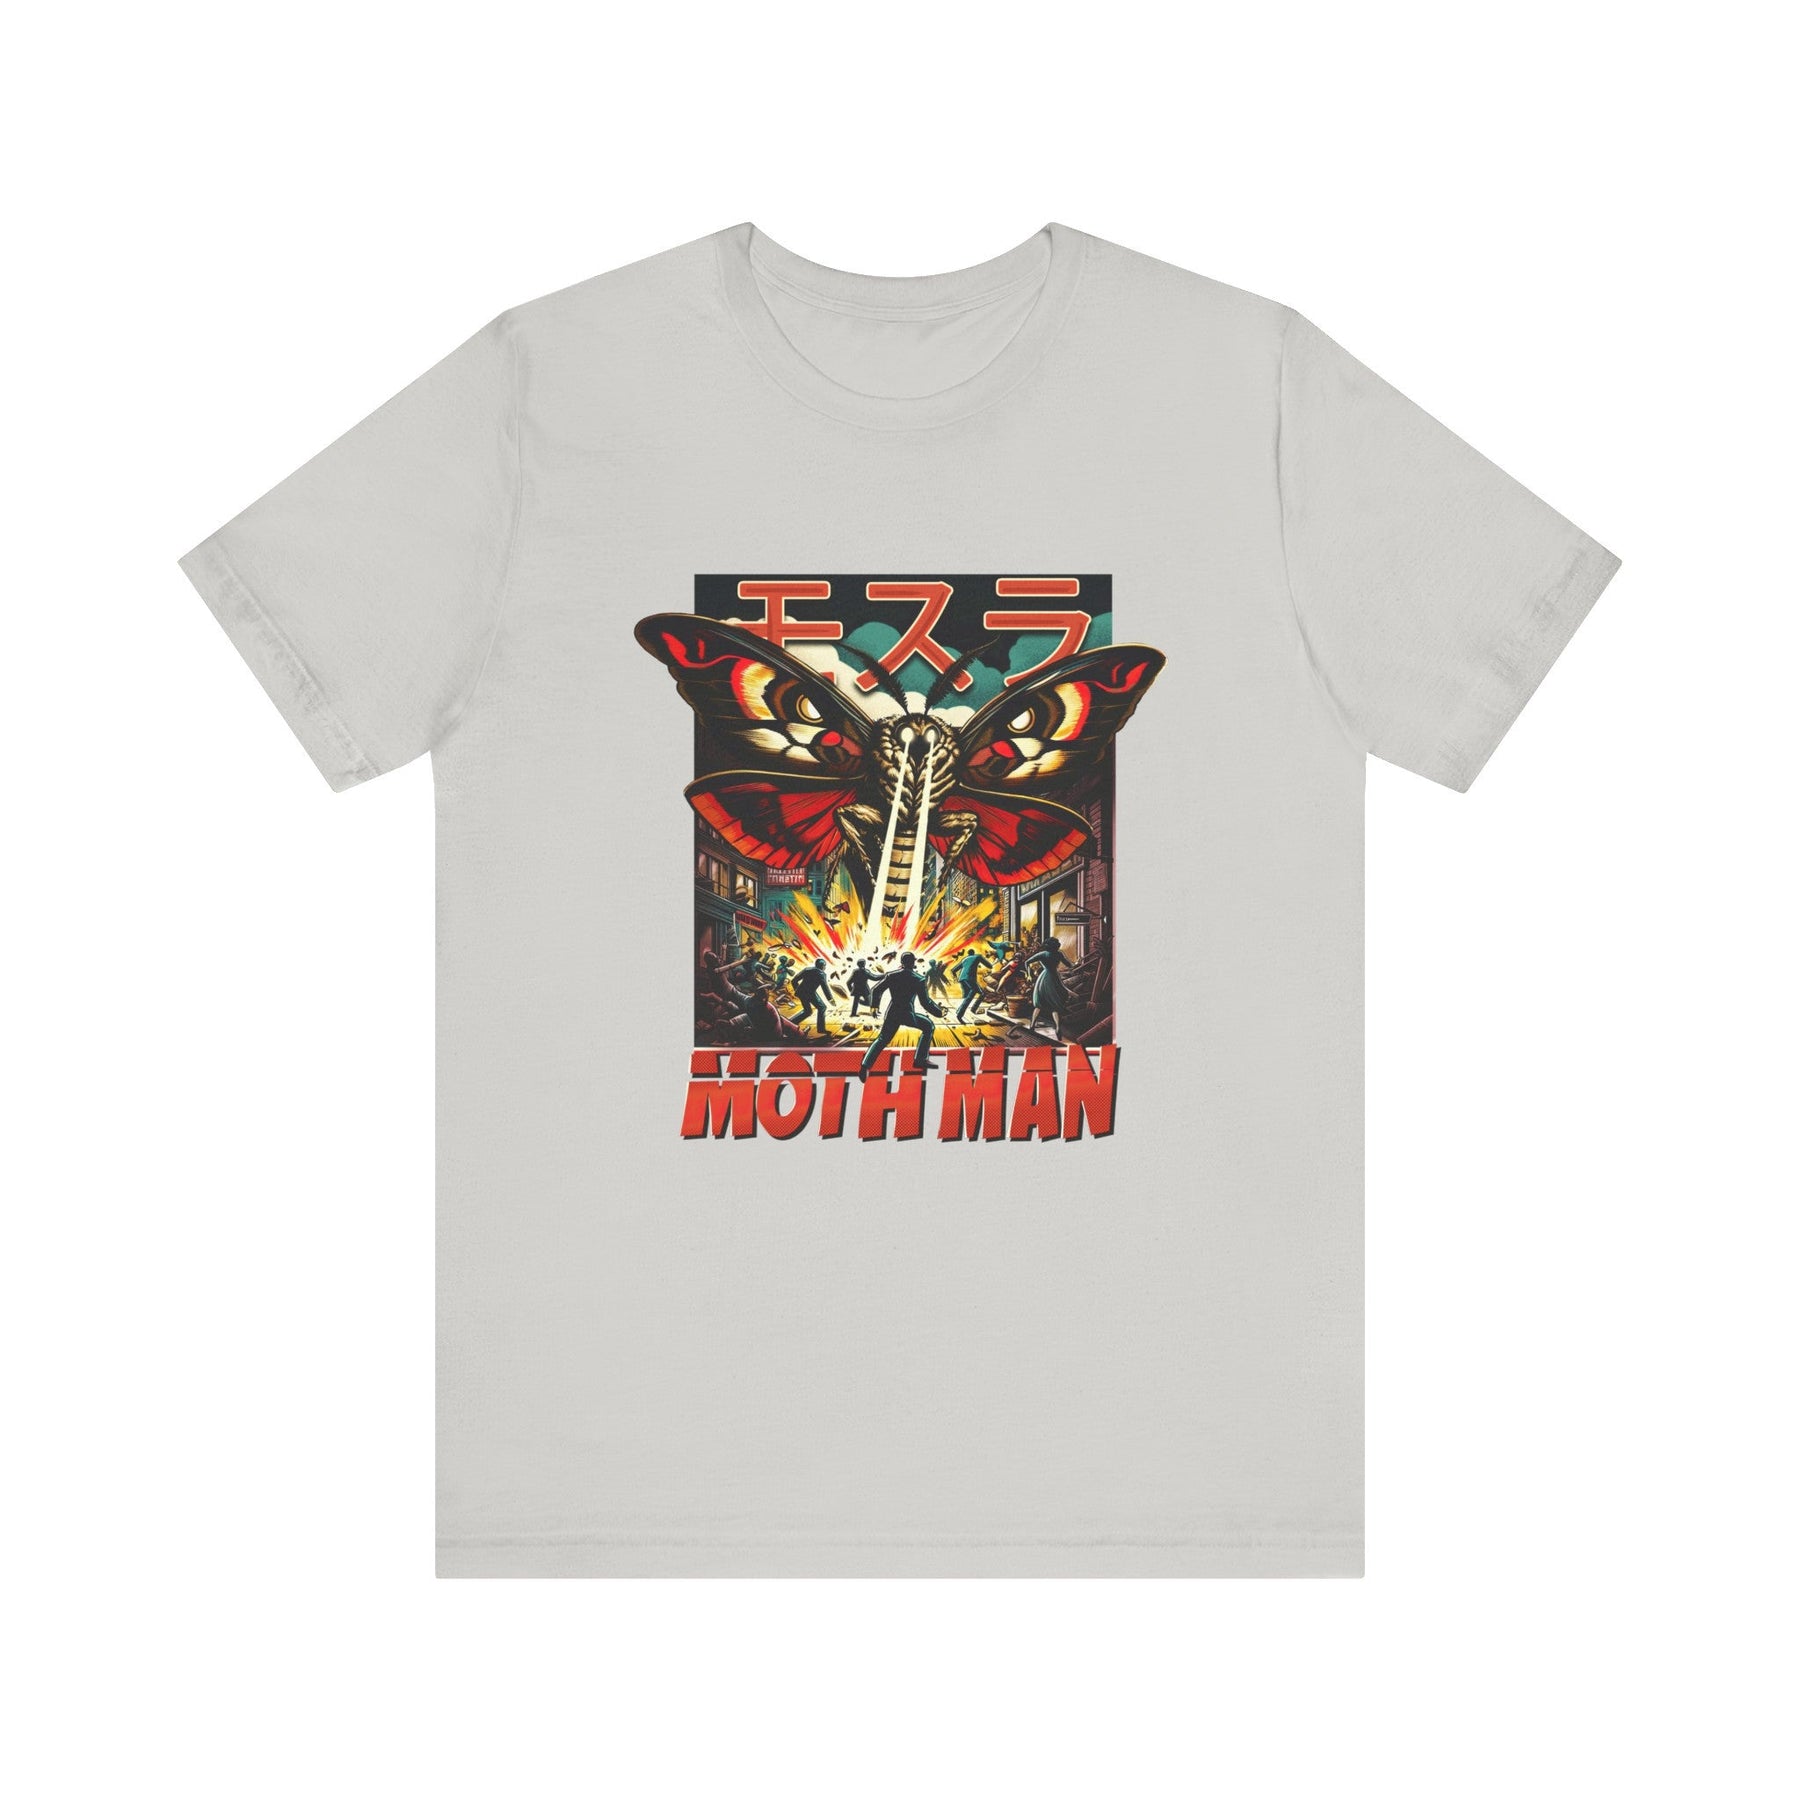 Mothman City Attack Vintage Comic - Style T - Shirt - Goth Cloth Co.T - Shirt20787142226405644260